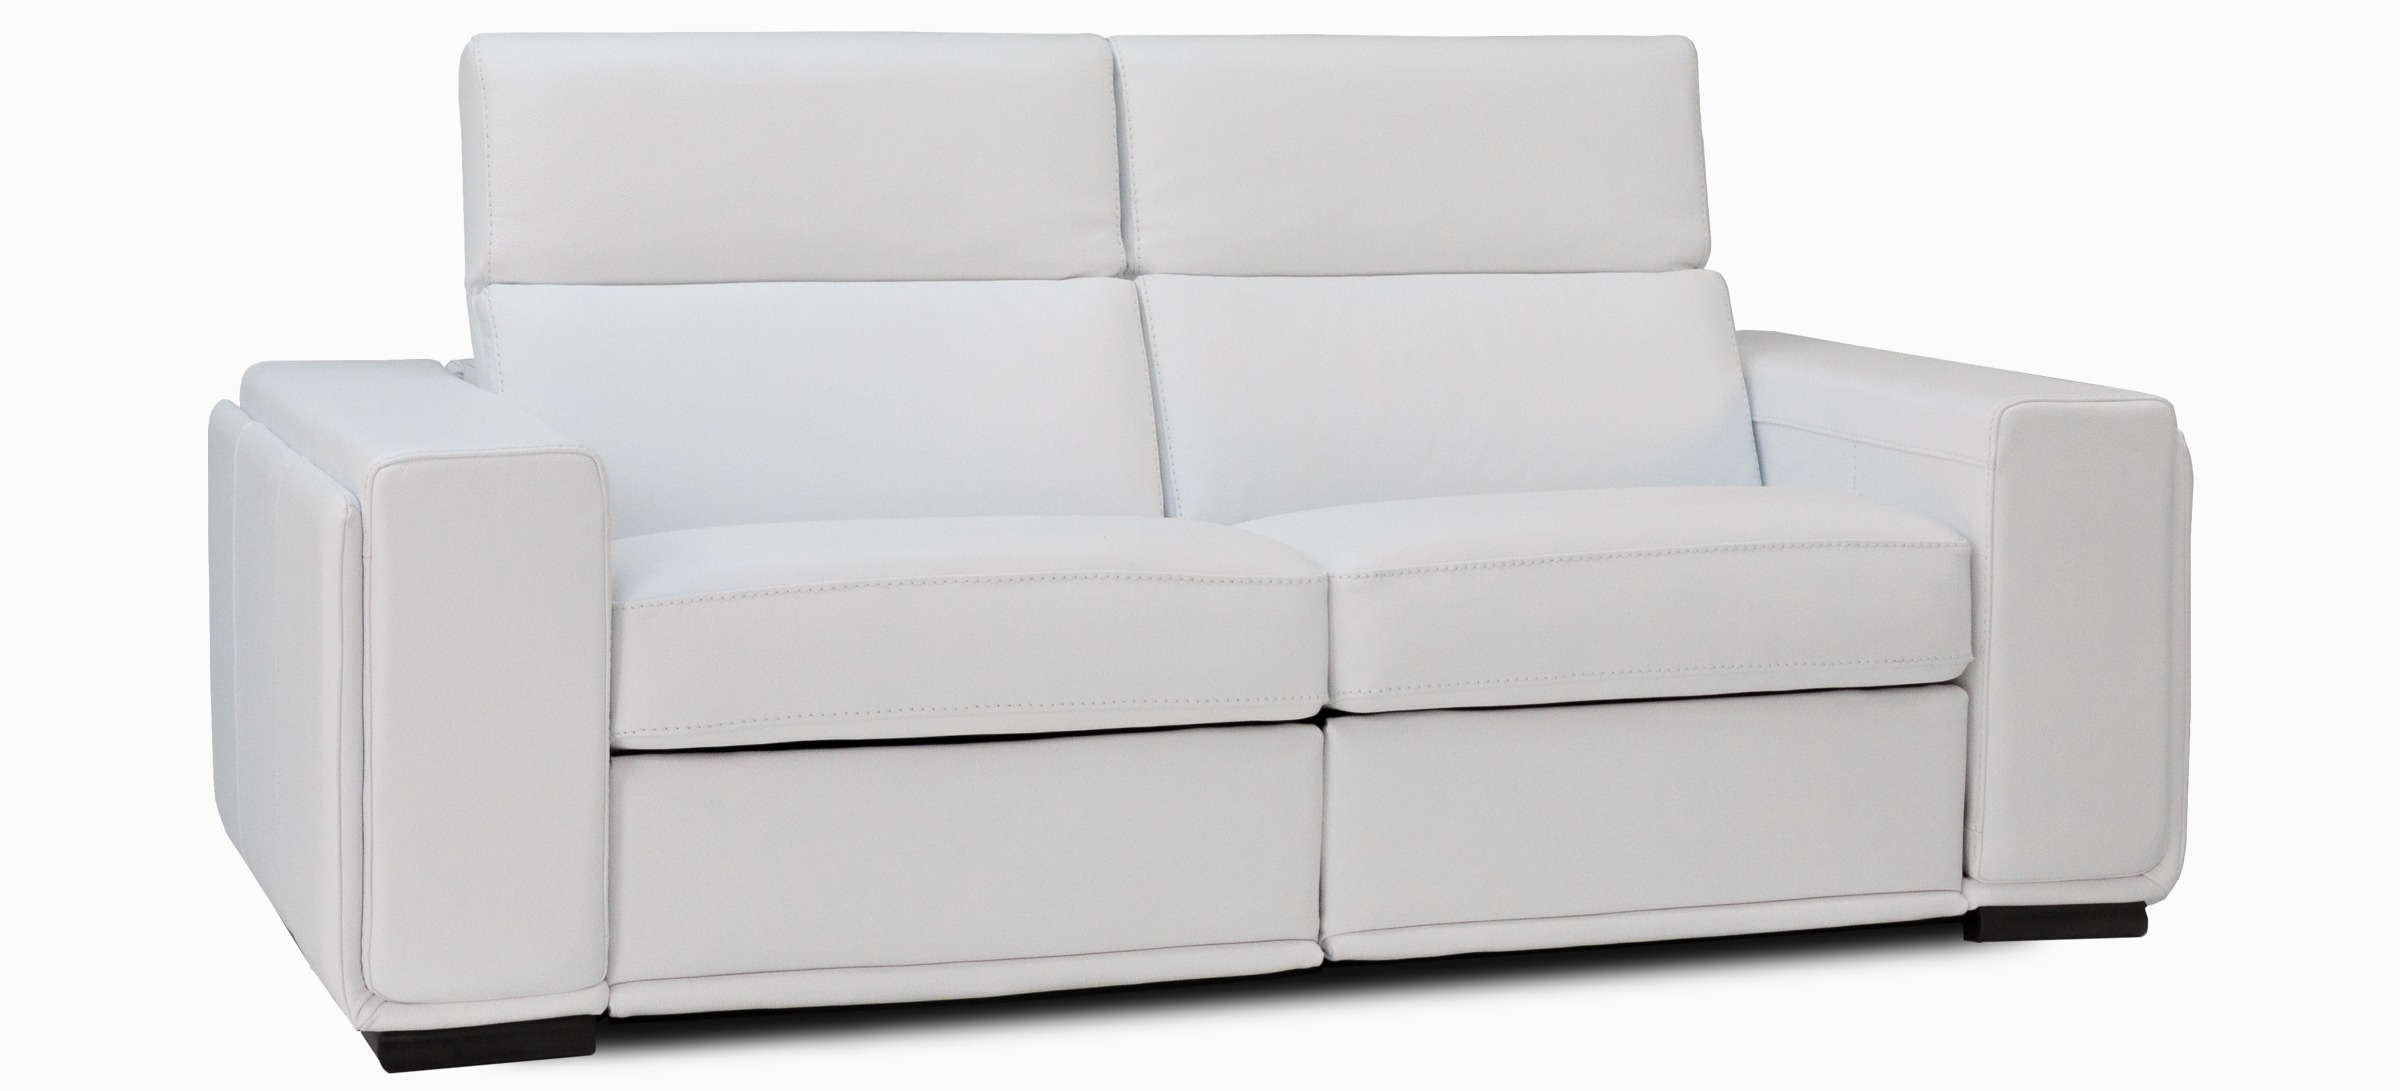 Maxima sofa apt Illusion White side